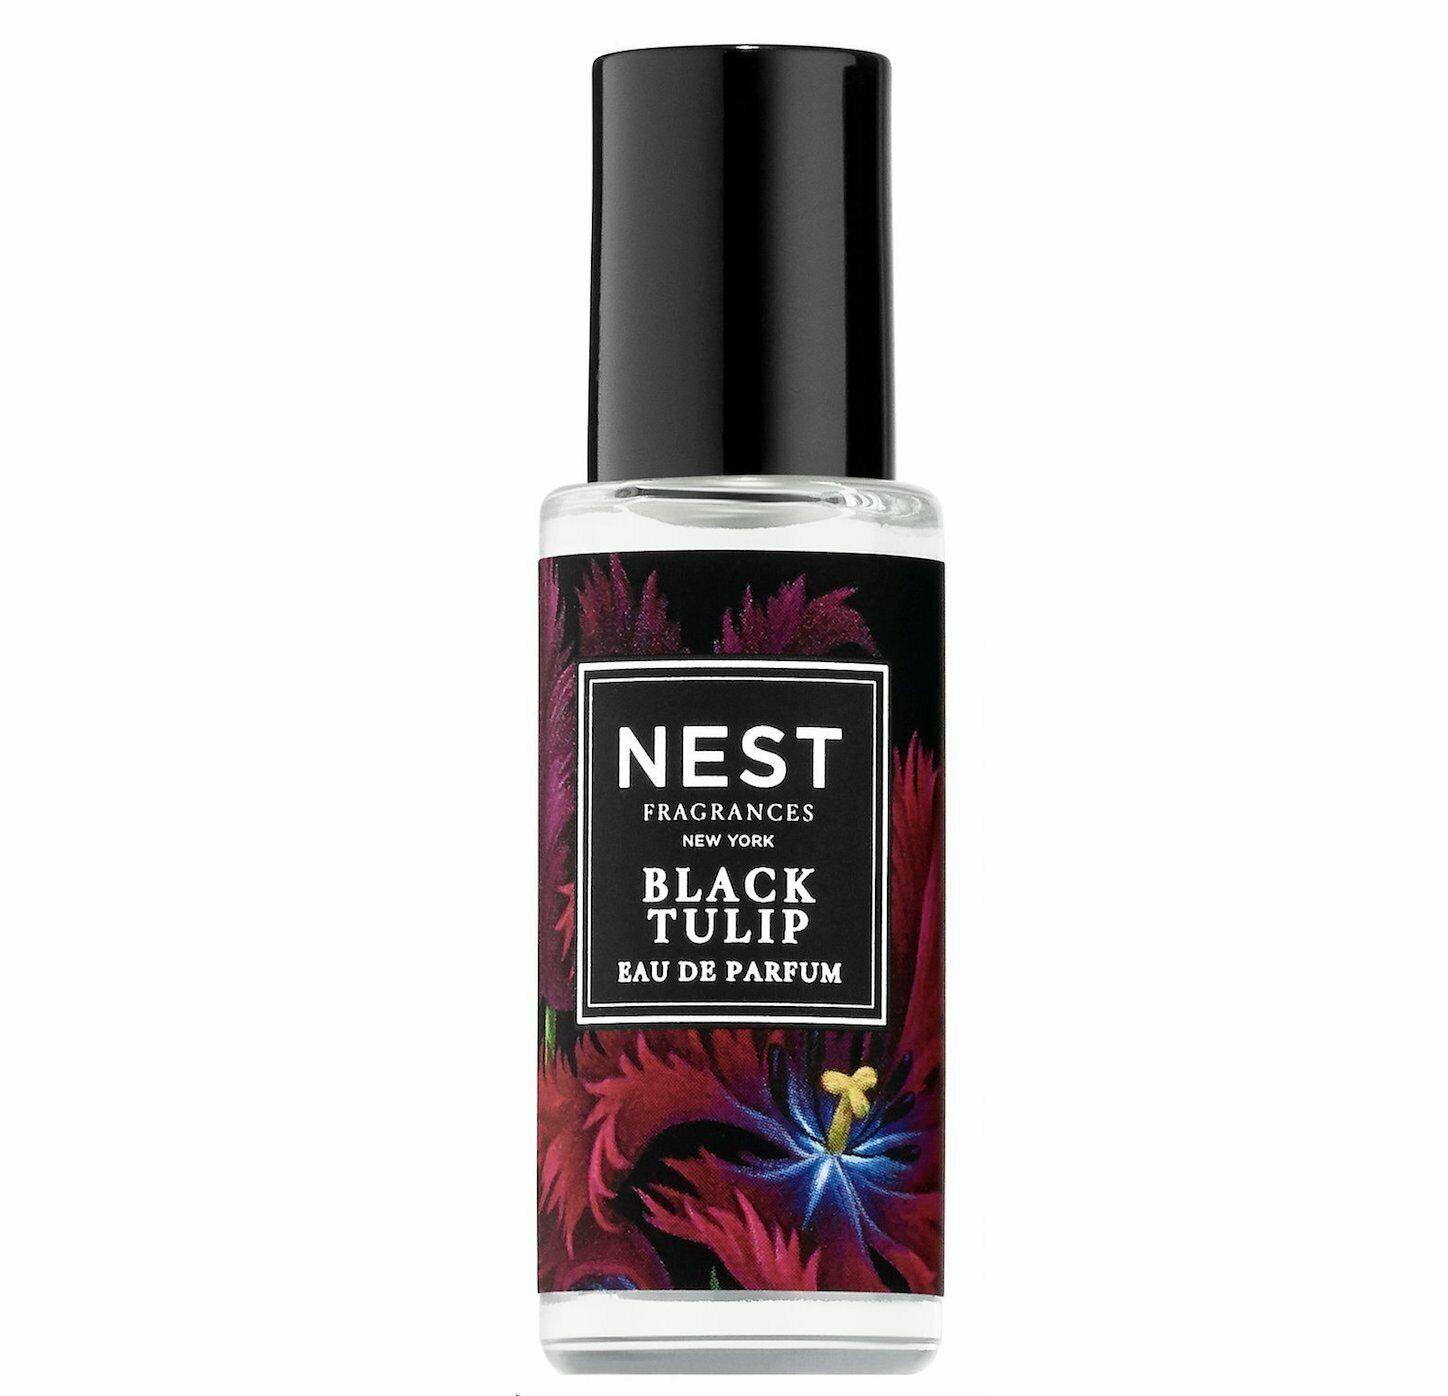 Nest Fragrances Black Tulip Travel